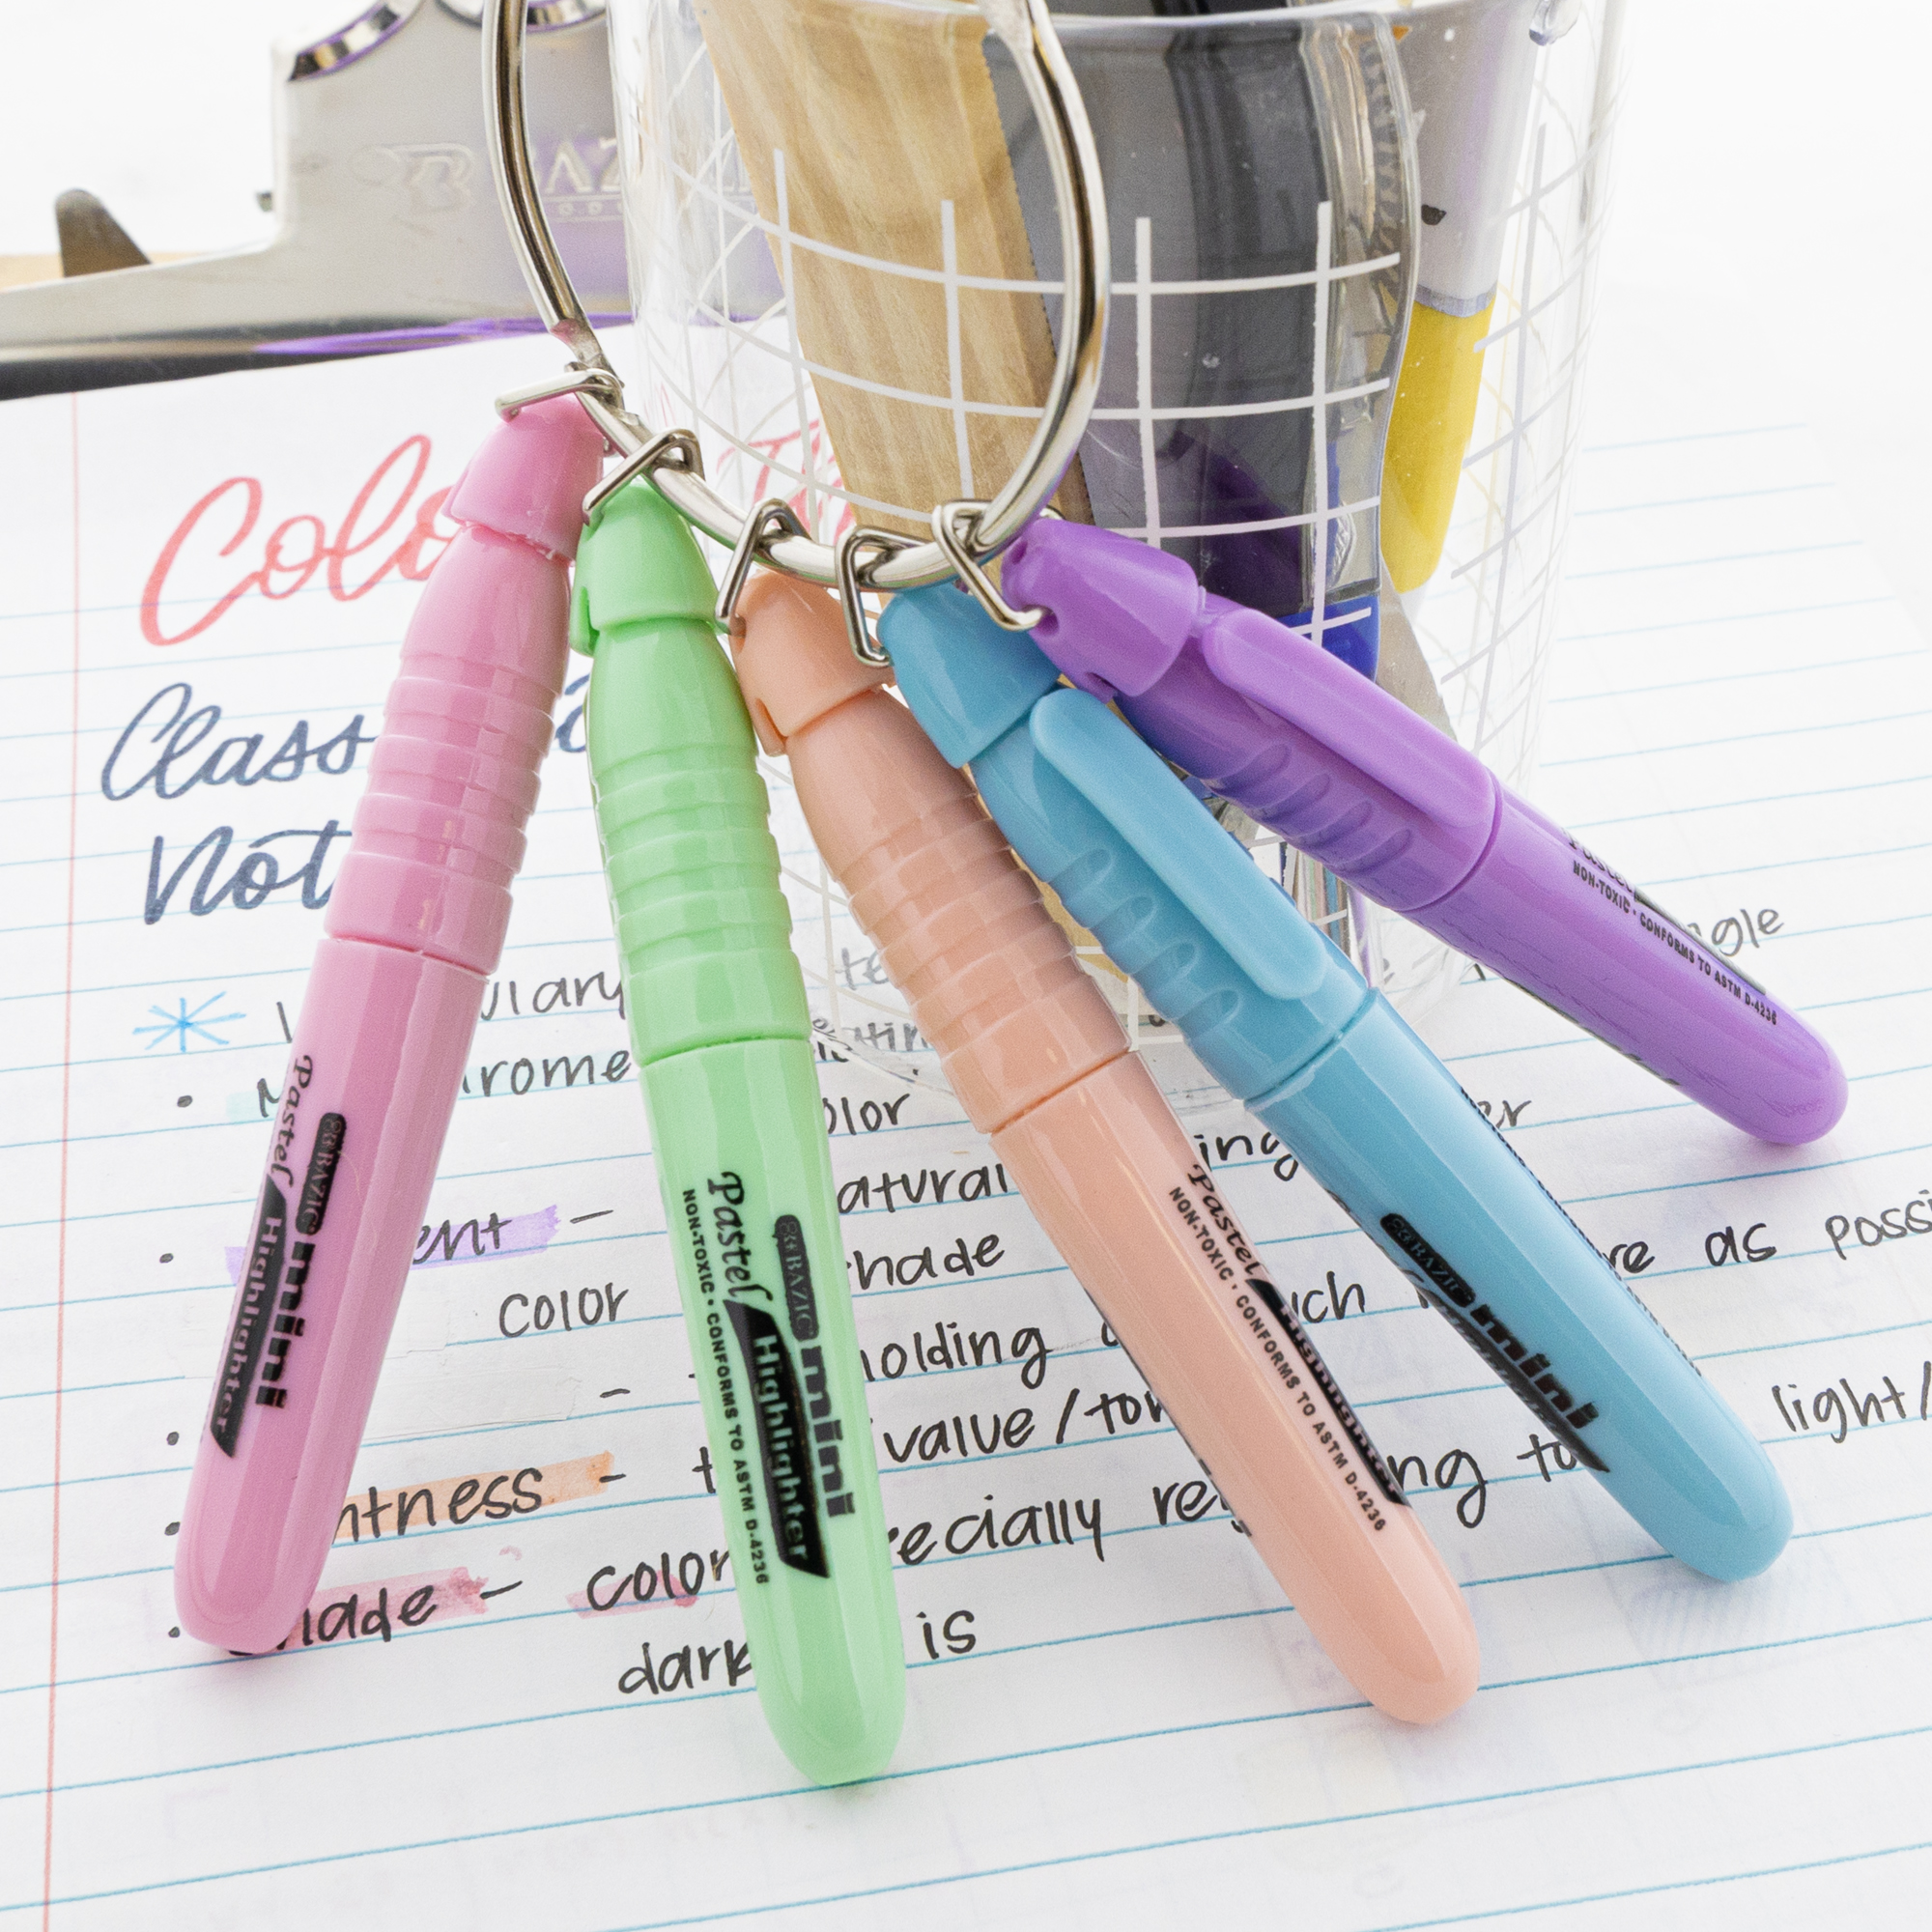 BAZIC Mini Highlighter w/ Pocket Clip, Assorted Color Chisel Tip